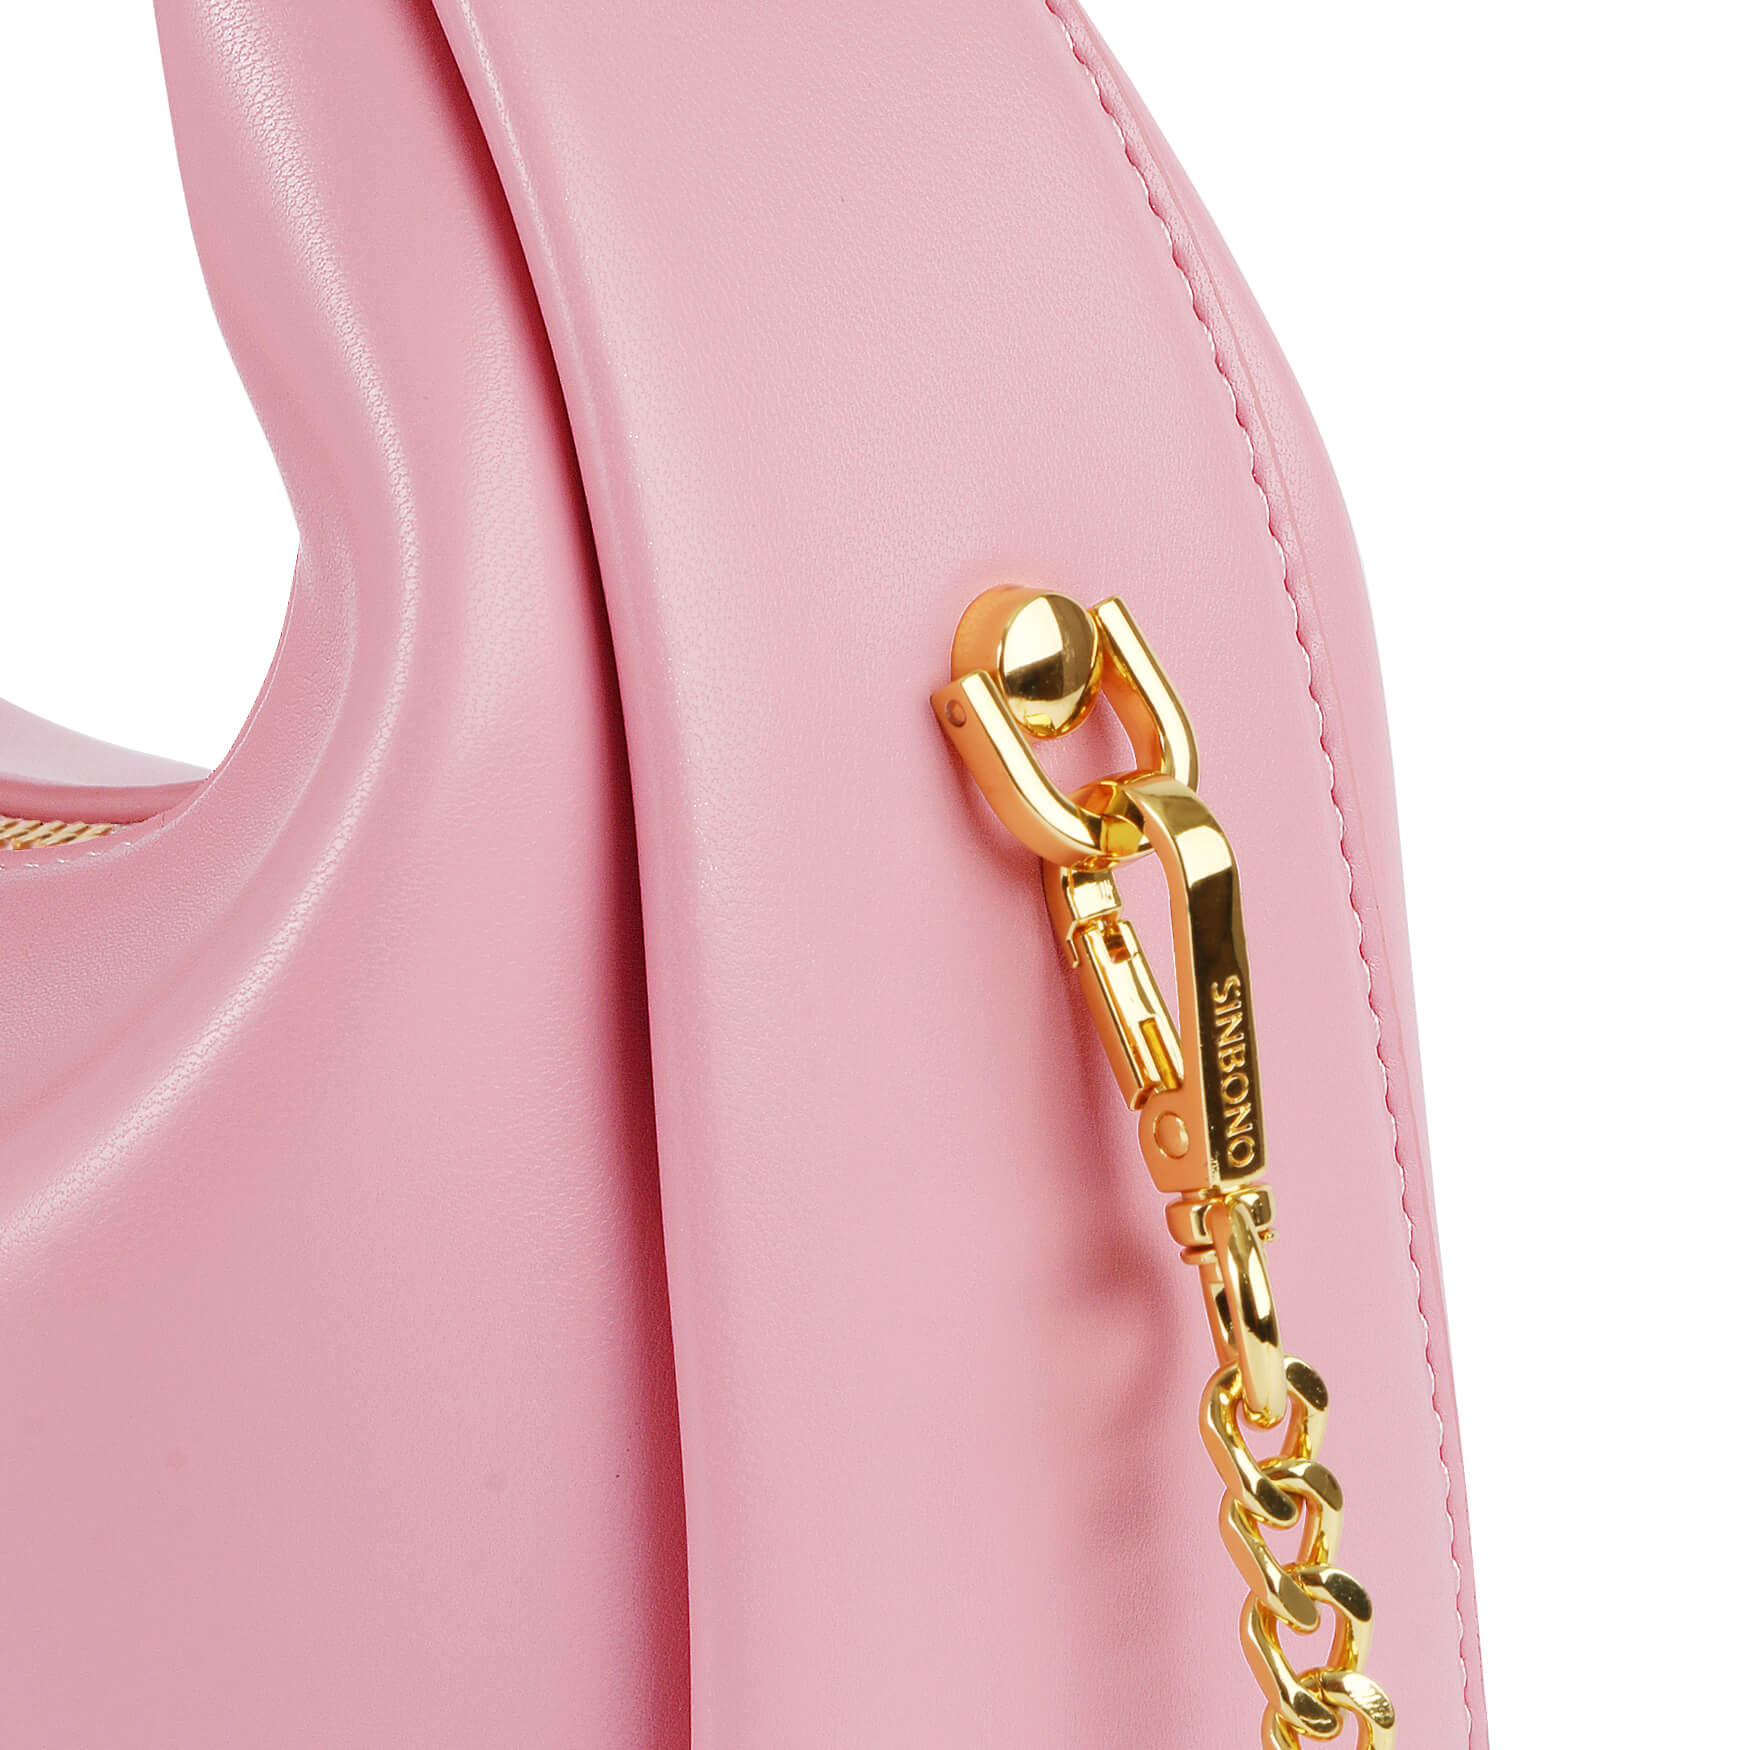 SINBONO Women Pink Vegan Leather Handbag Bag with Handle | Vegan Bag